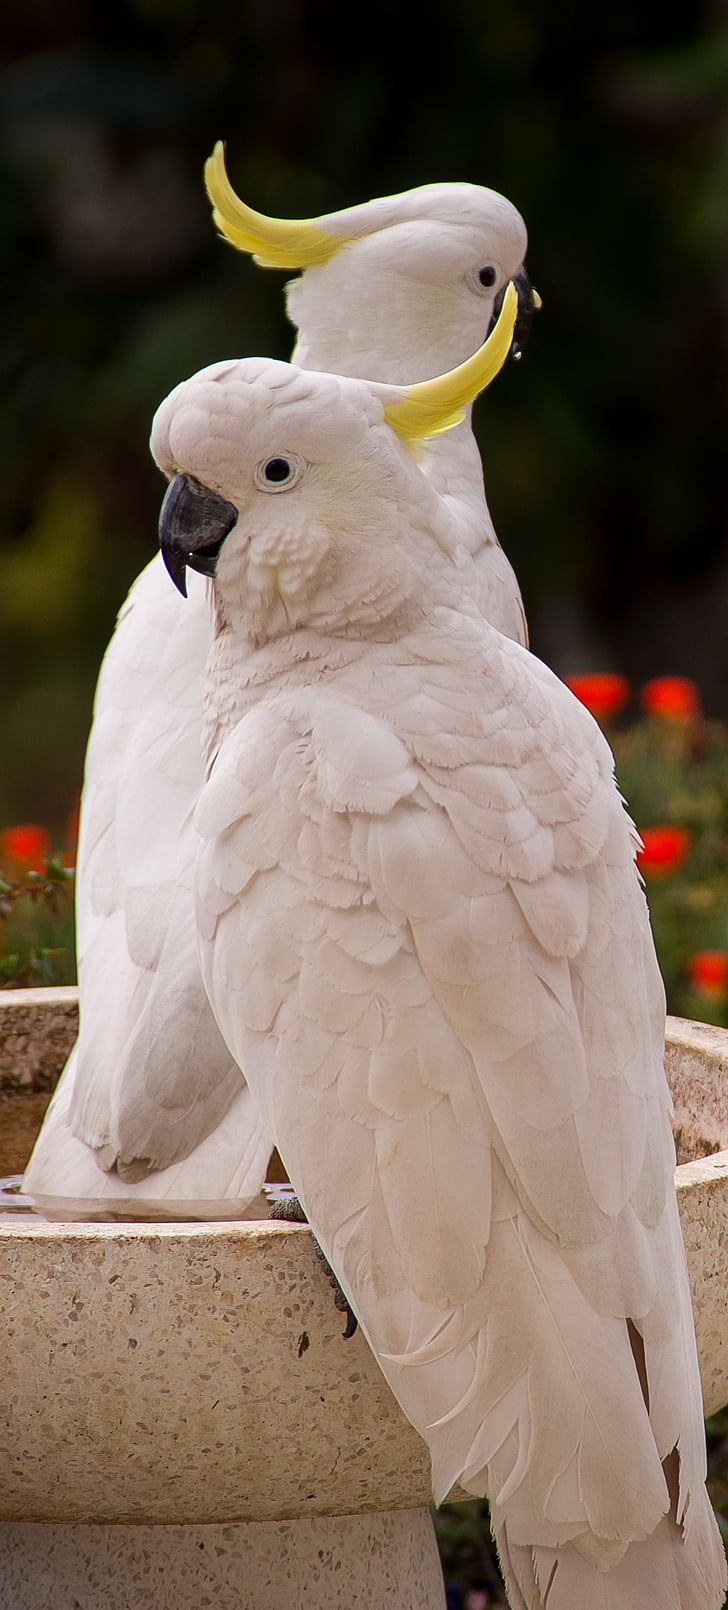 sulphur crested cockatoo, parrot, cacatua galerita, bird, feather, white, yellow